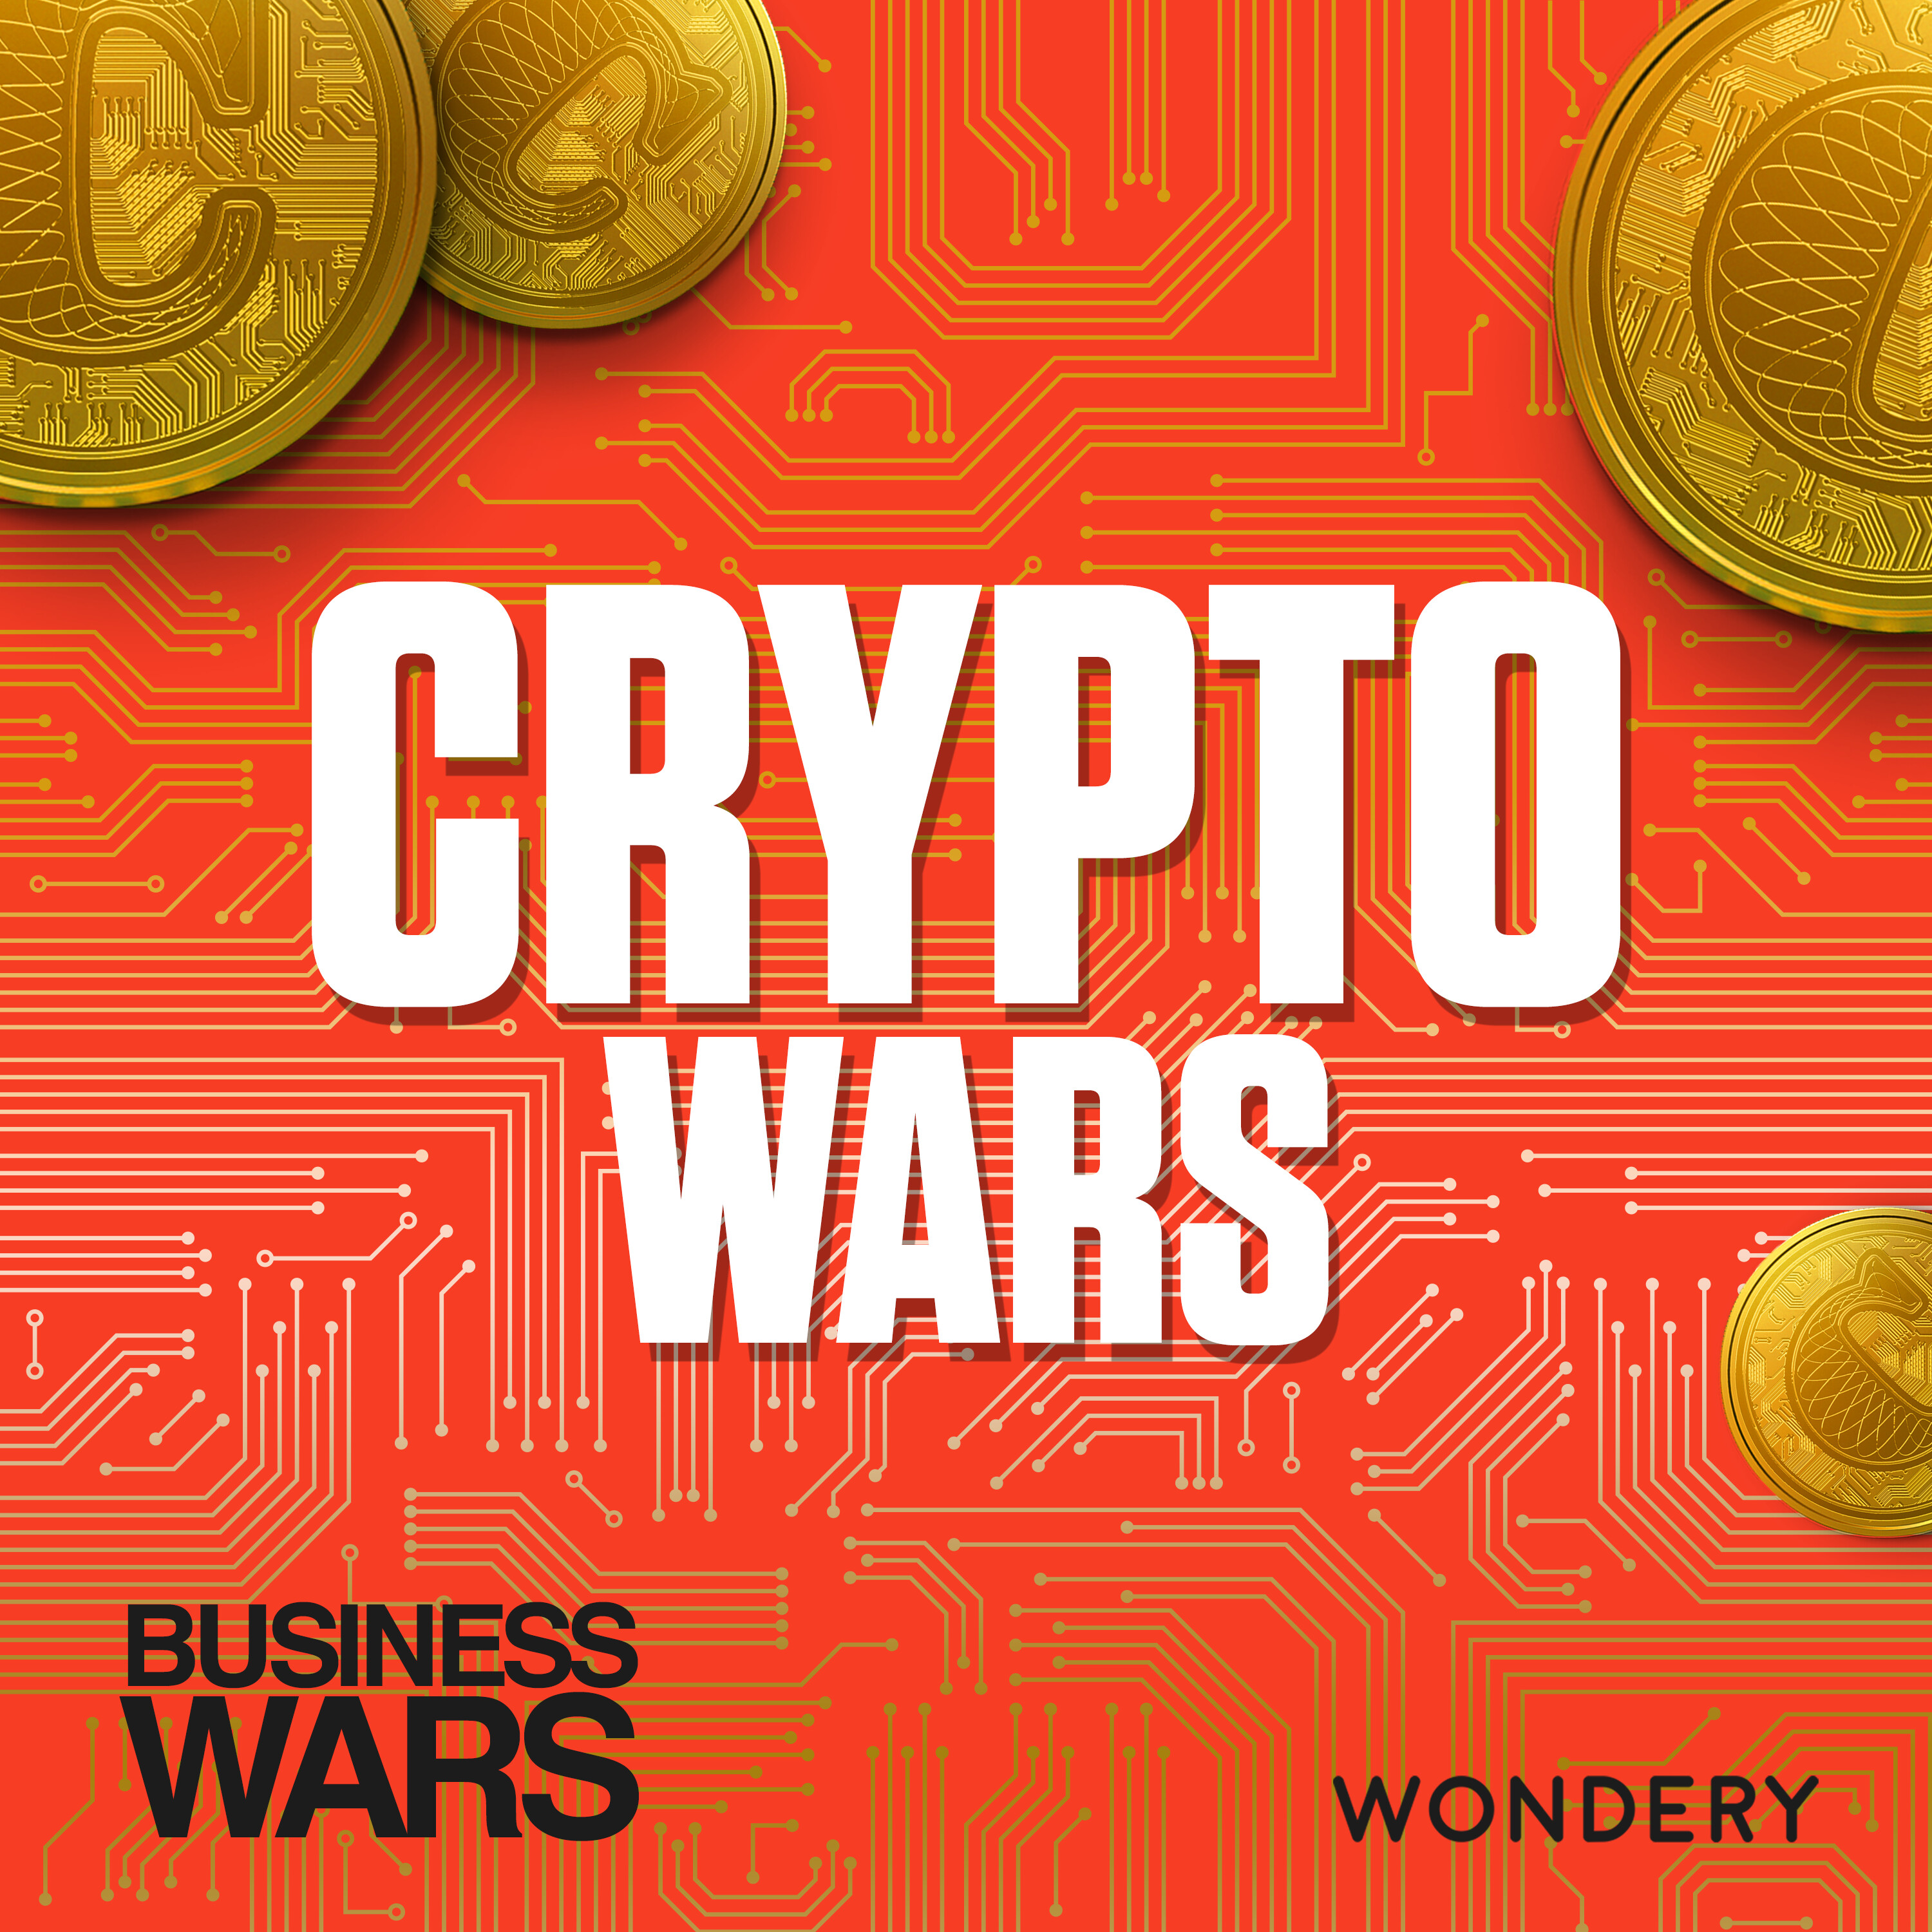 Encore: Crypto Wars | The Untouchables | 2